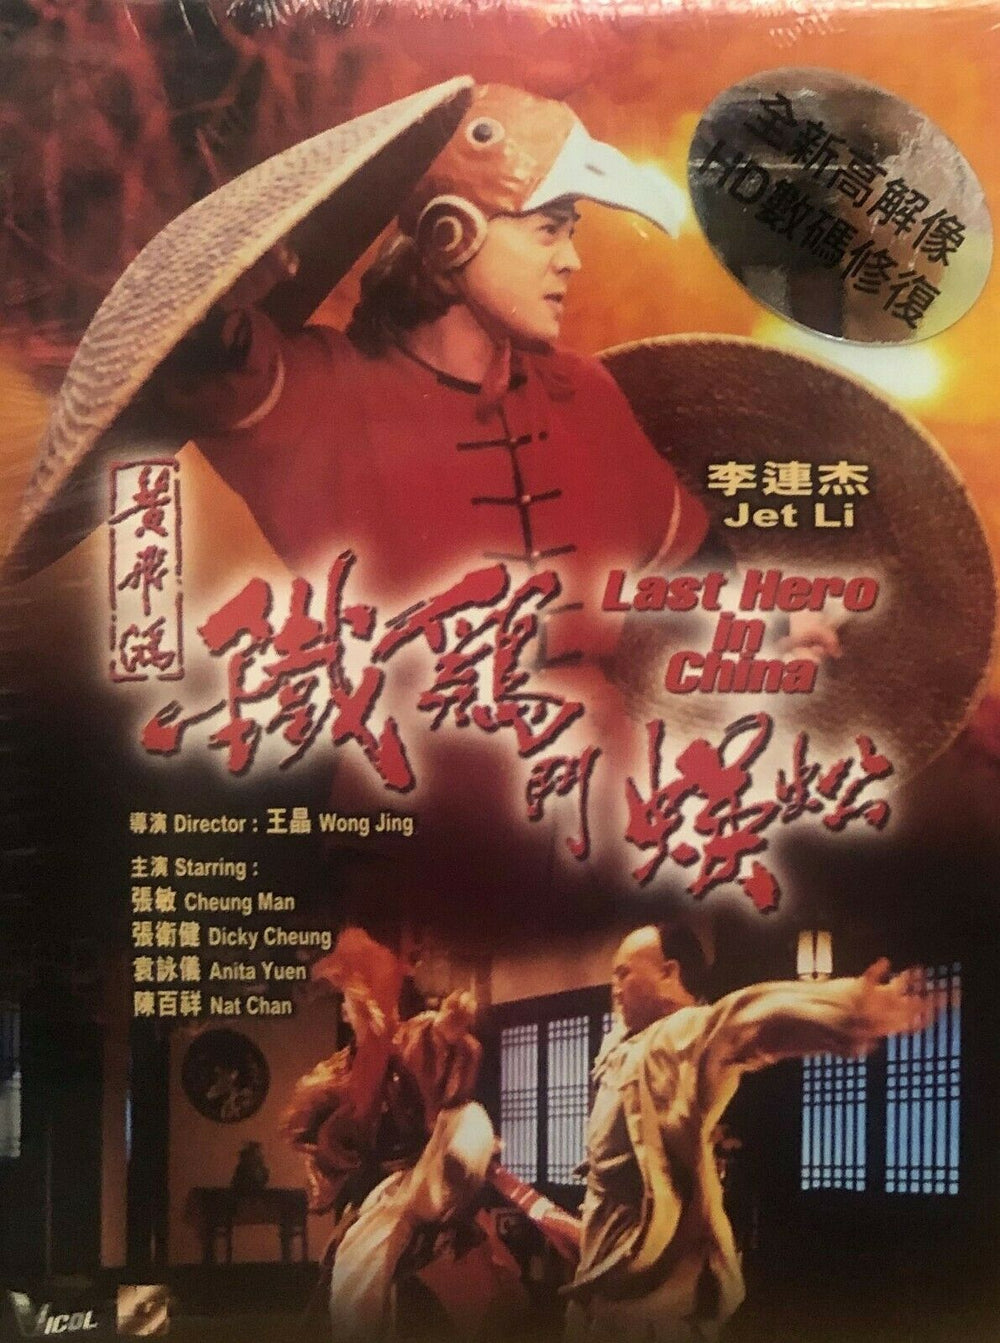 Last Hero in China 黃飛鴻之鐵鷄鬥蜈蚣1993 JET LI (BLU-RAY) with English Sub (Region Free)